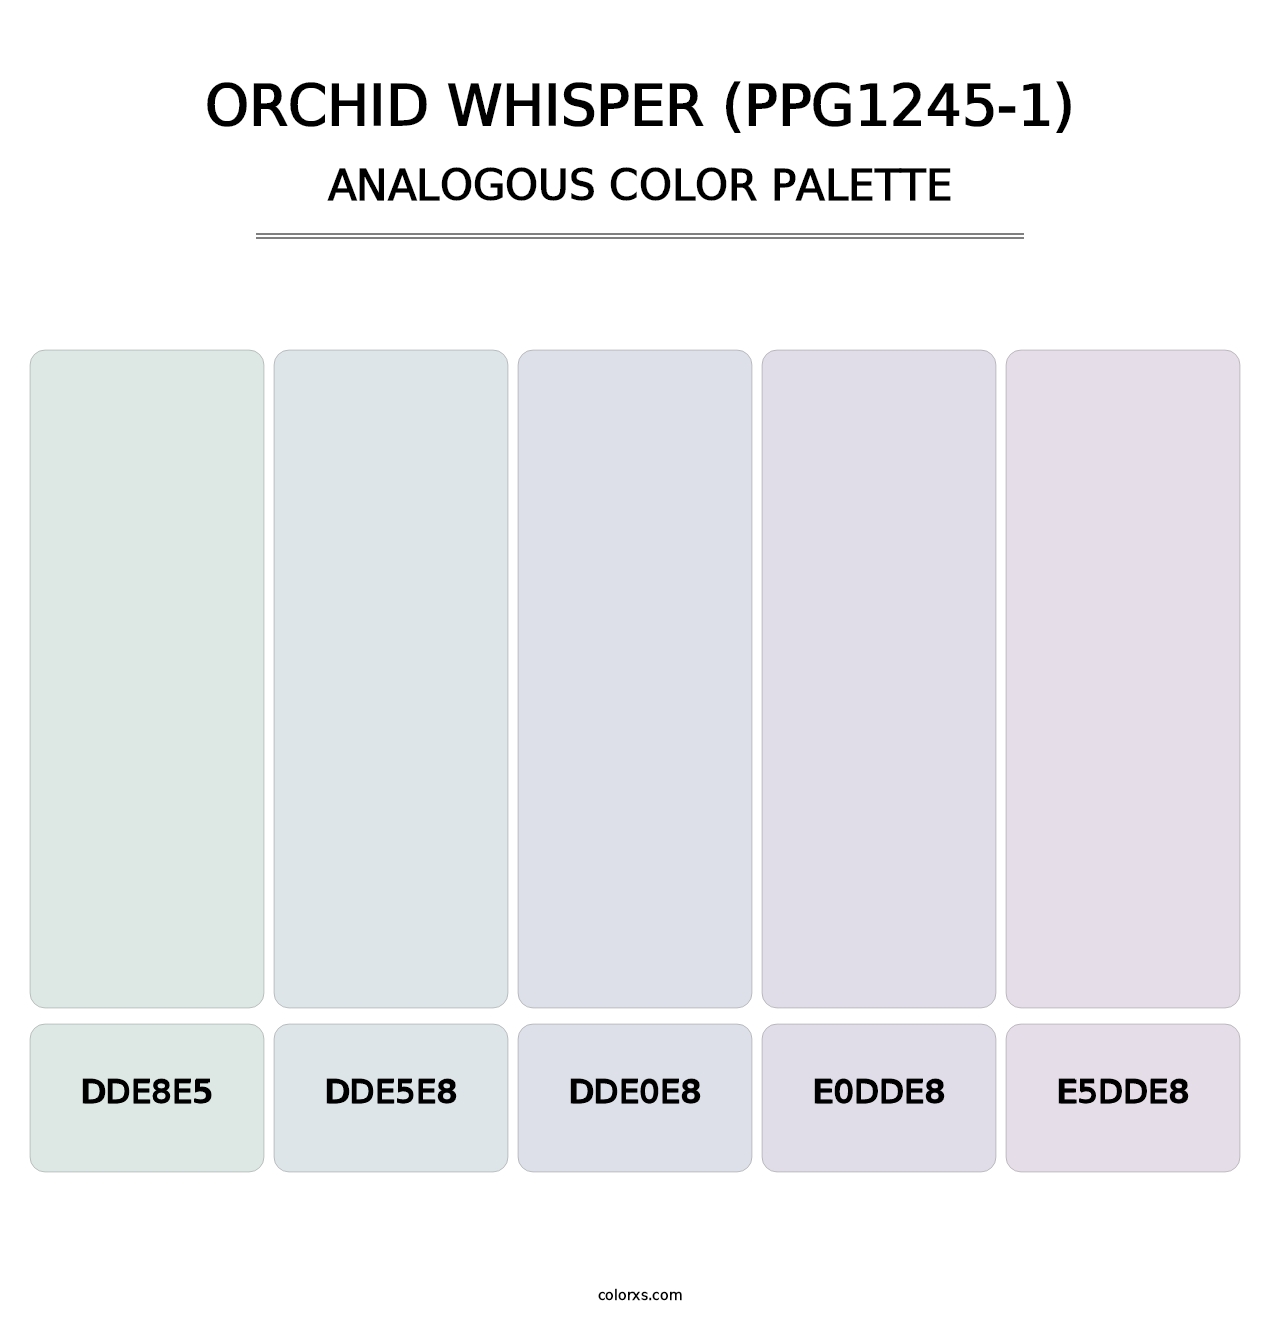 Orchid Whisper (PPG1245-1) - Analogous Color Palette